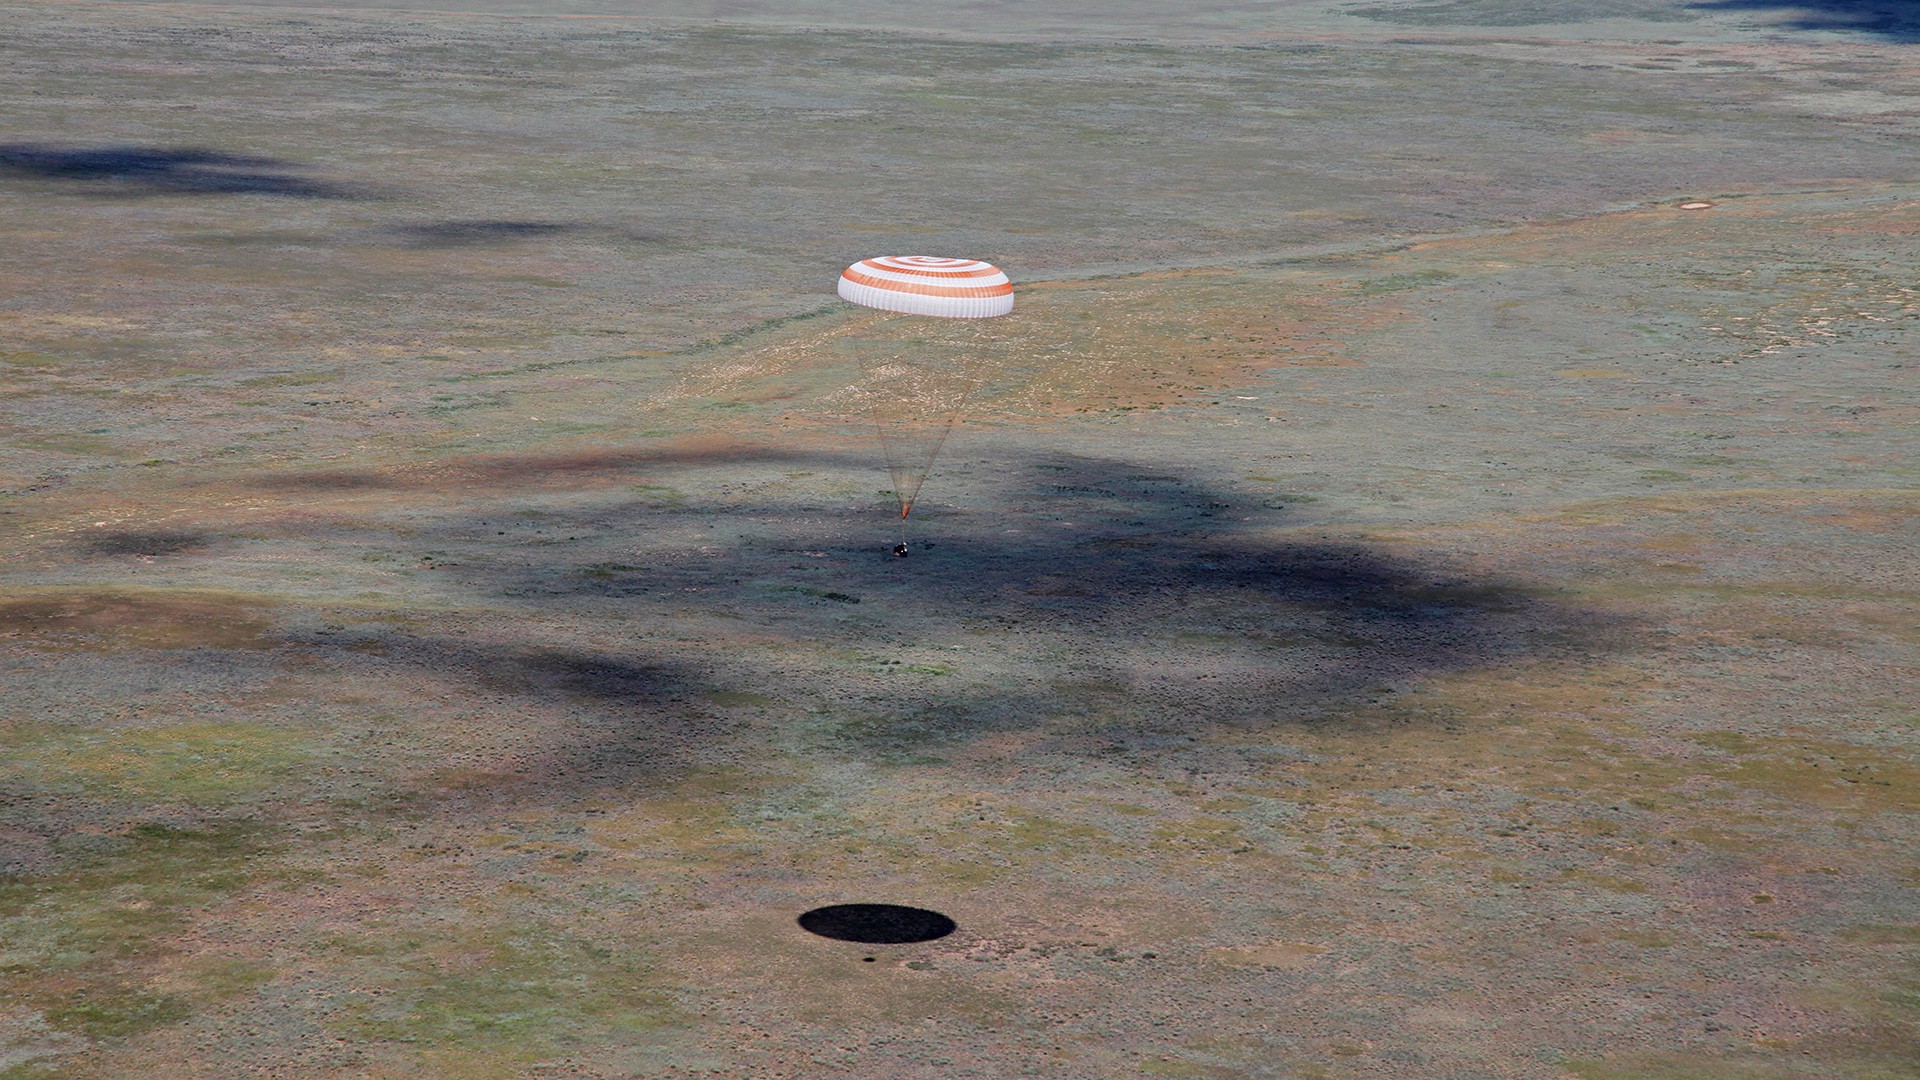 General 1920x1080 Roscosmos NASA Soyuz parachutes